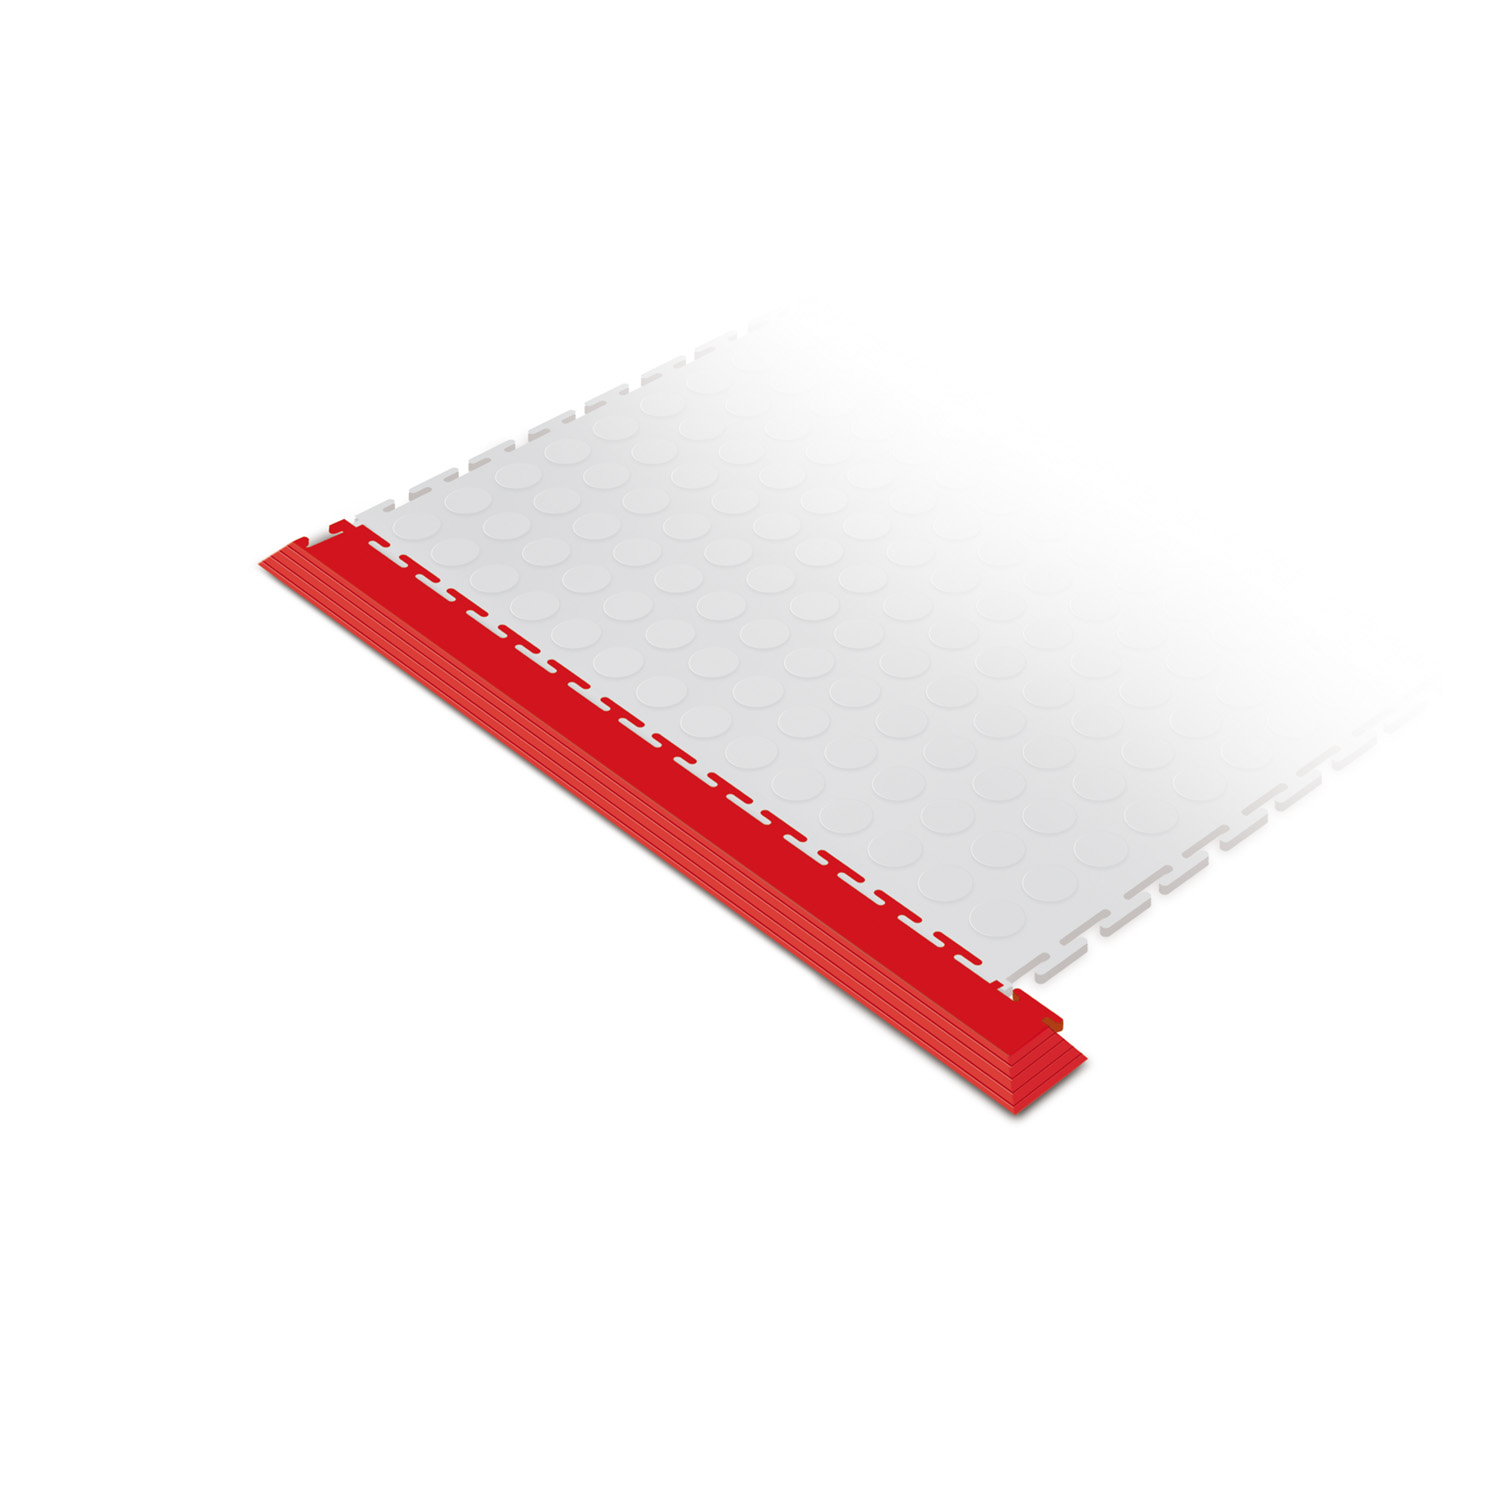 Standard corner edge ramp tile (red)